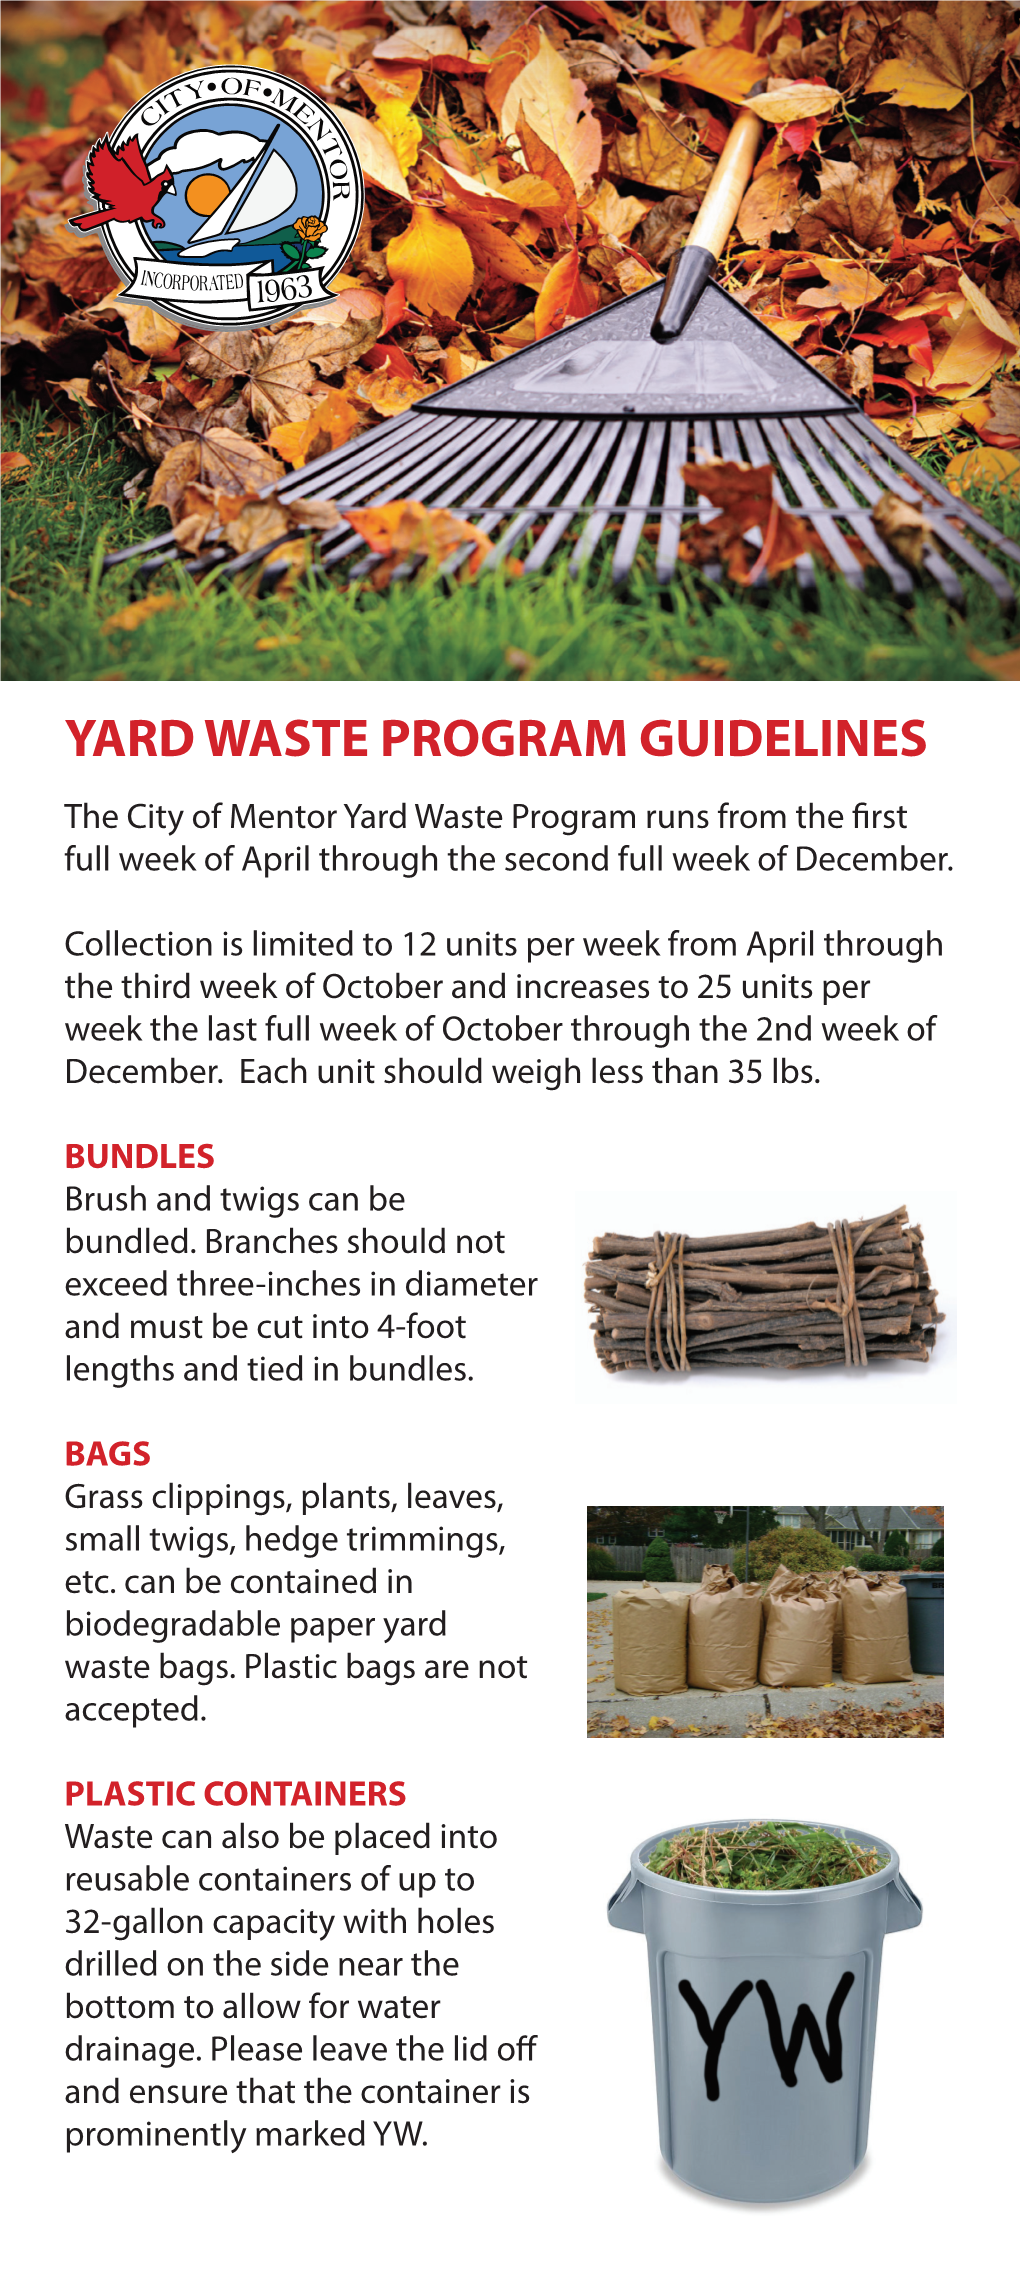 City of Mentor Yard Waste Program Guidelines